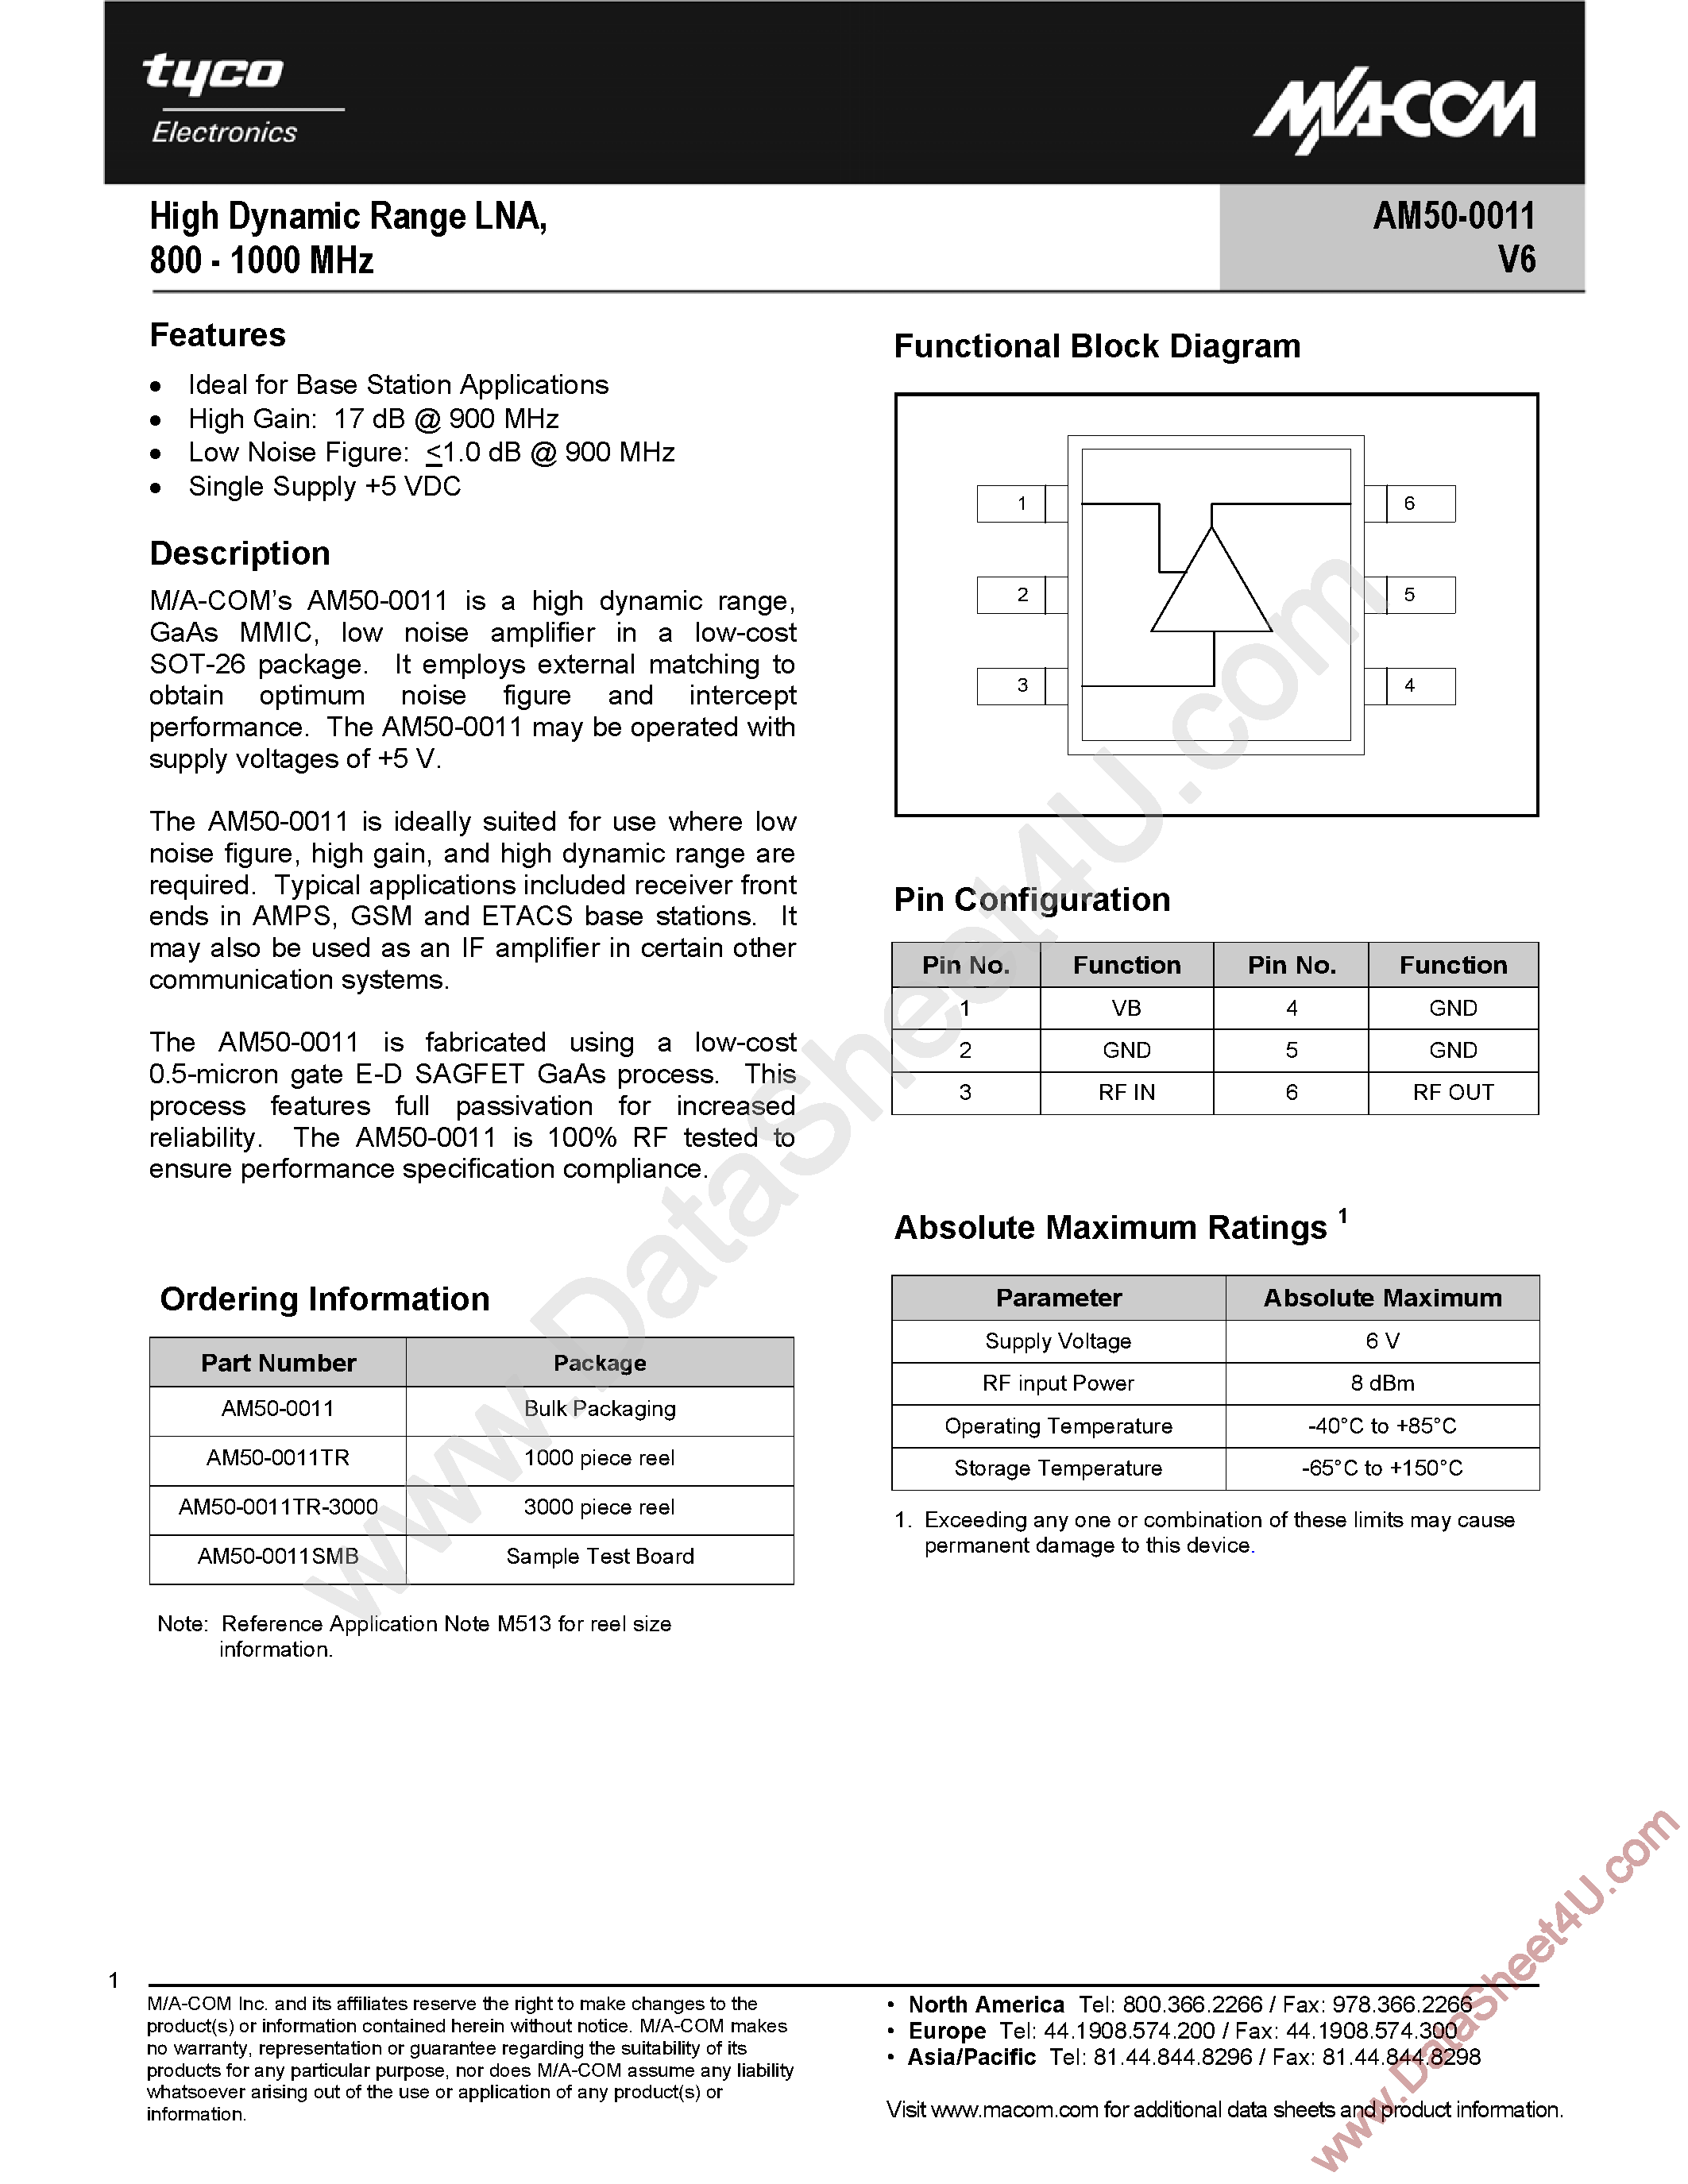 Datasheet AM50-0011V6 - High Dynamic Range Low Noise Amplifier page 1